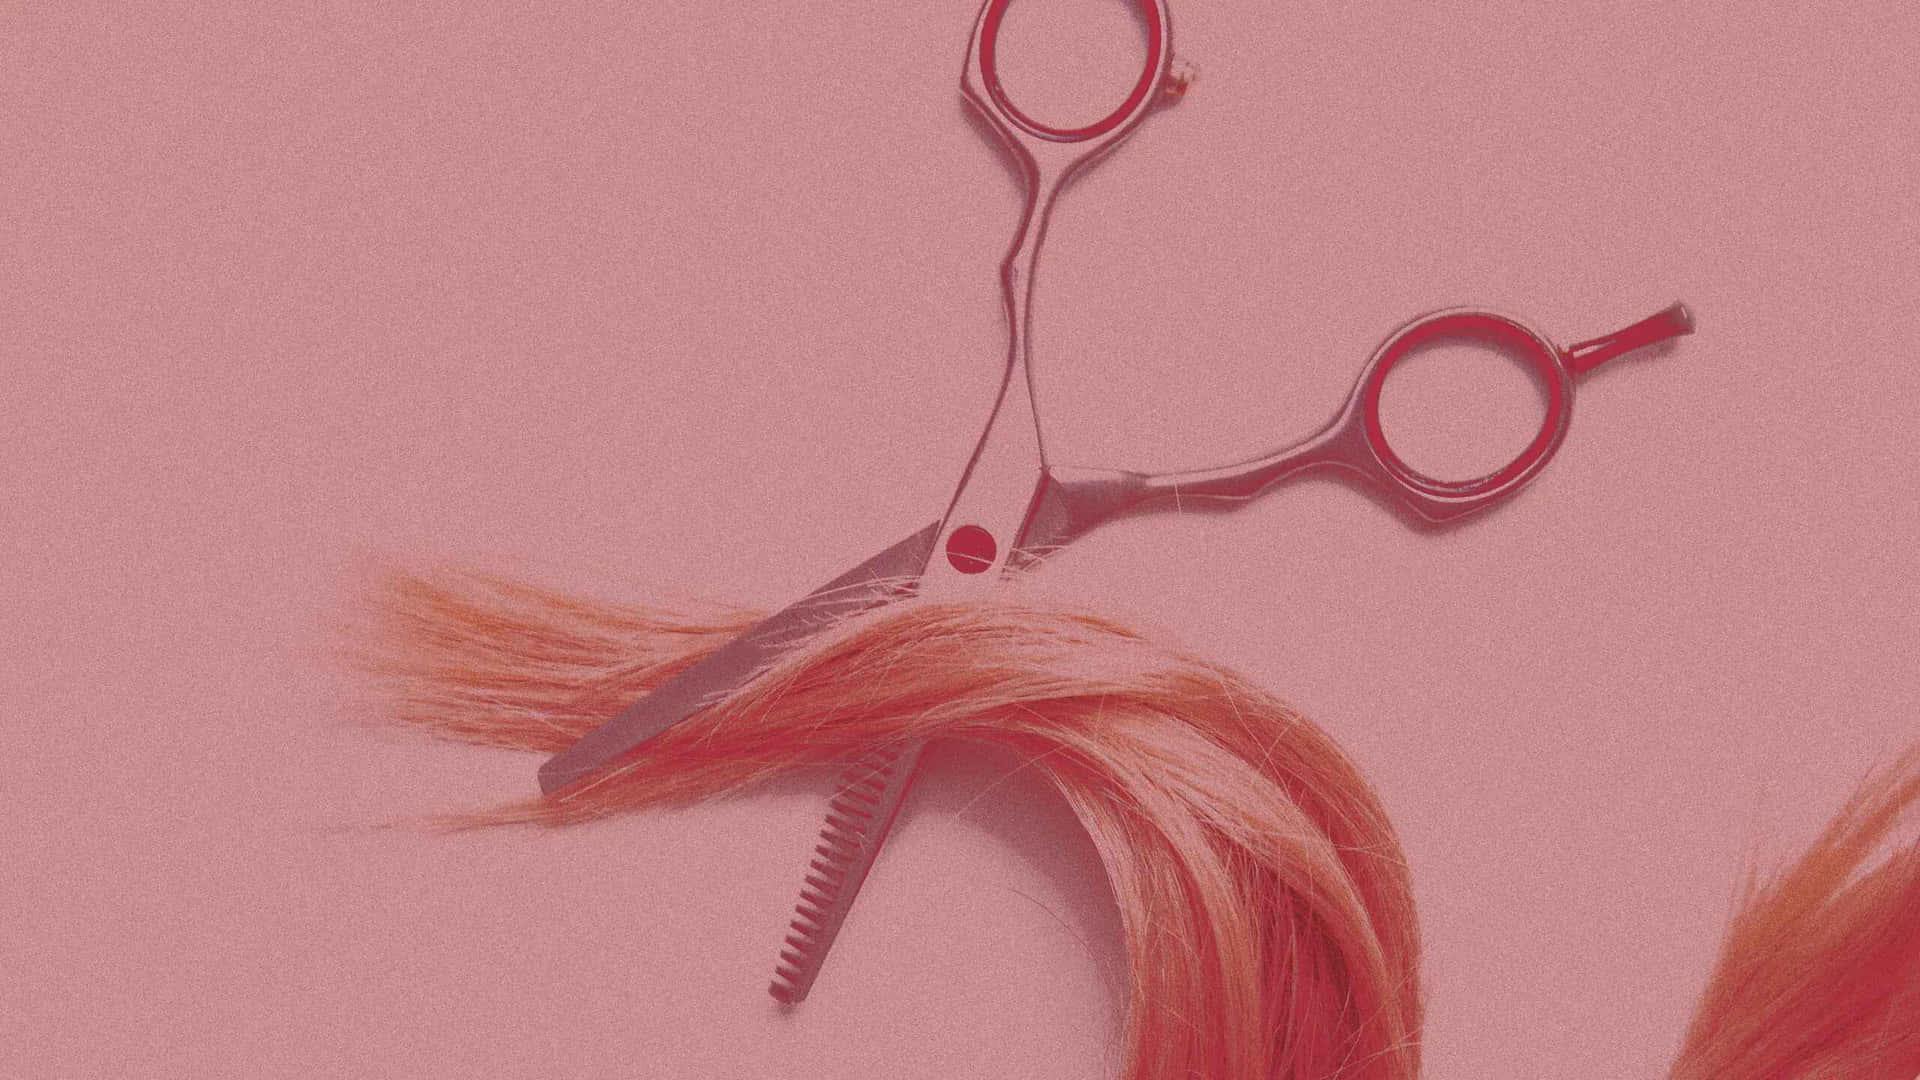 Hair Styling Tools Pink Aesthetic.jpg Wallpaper